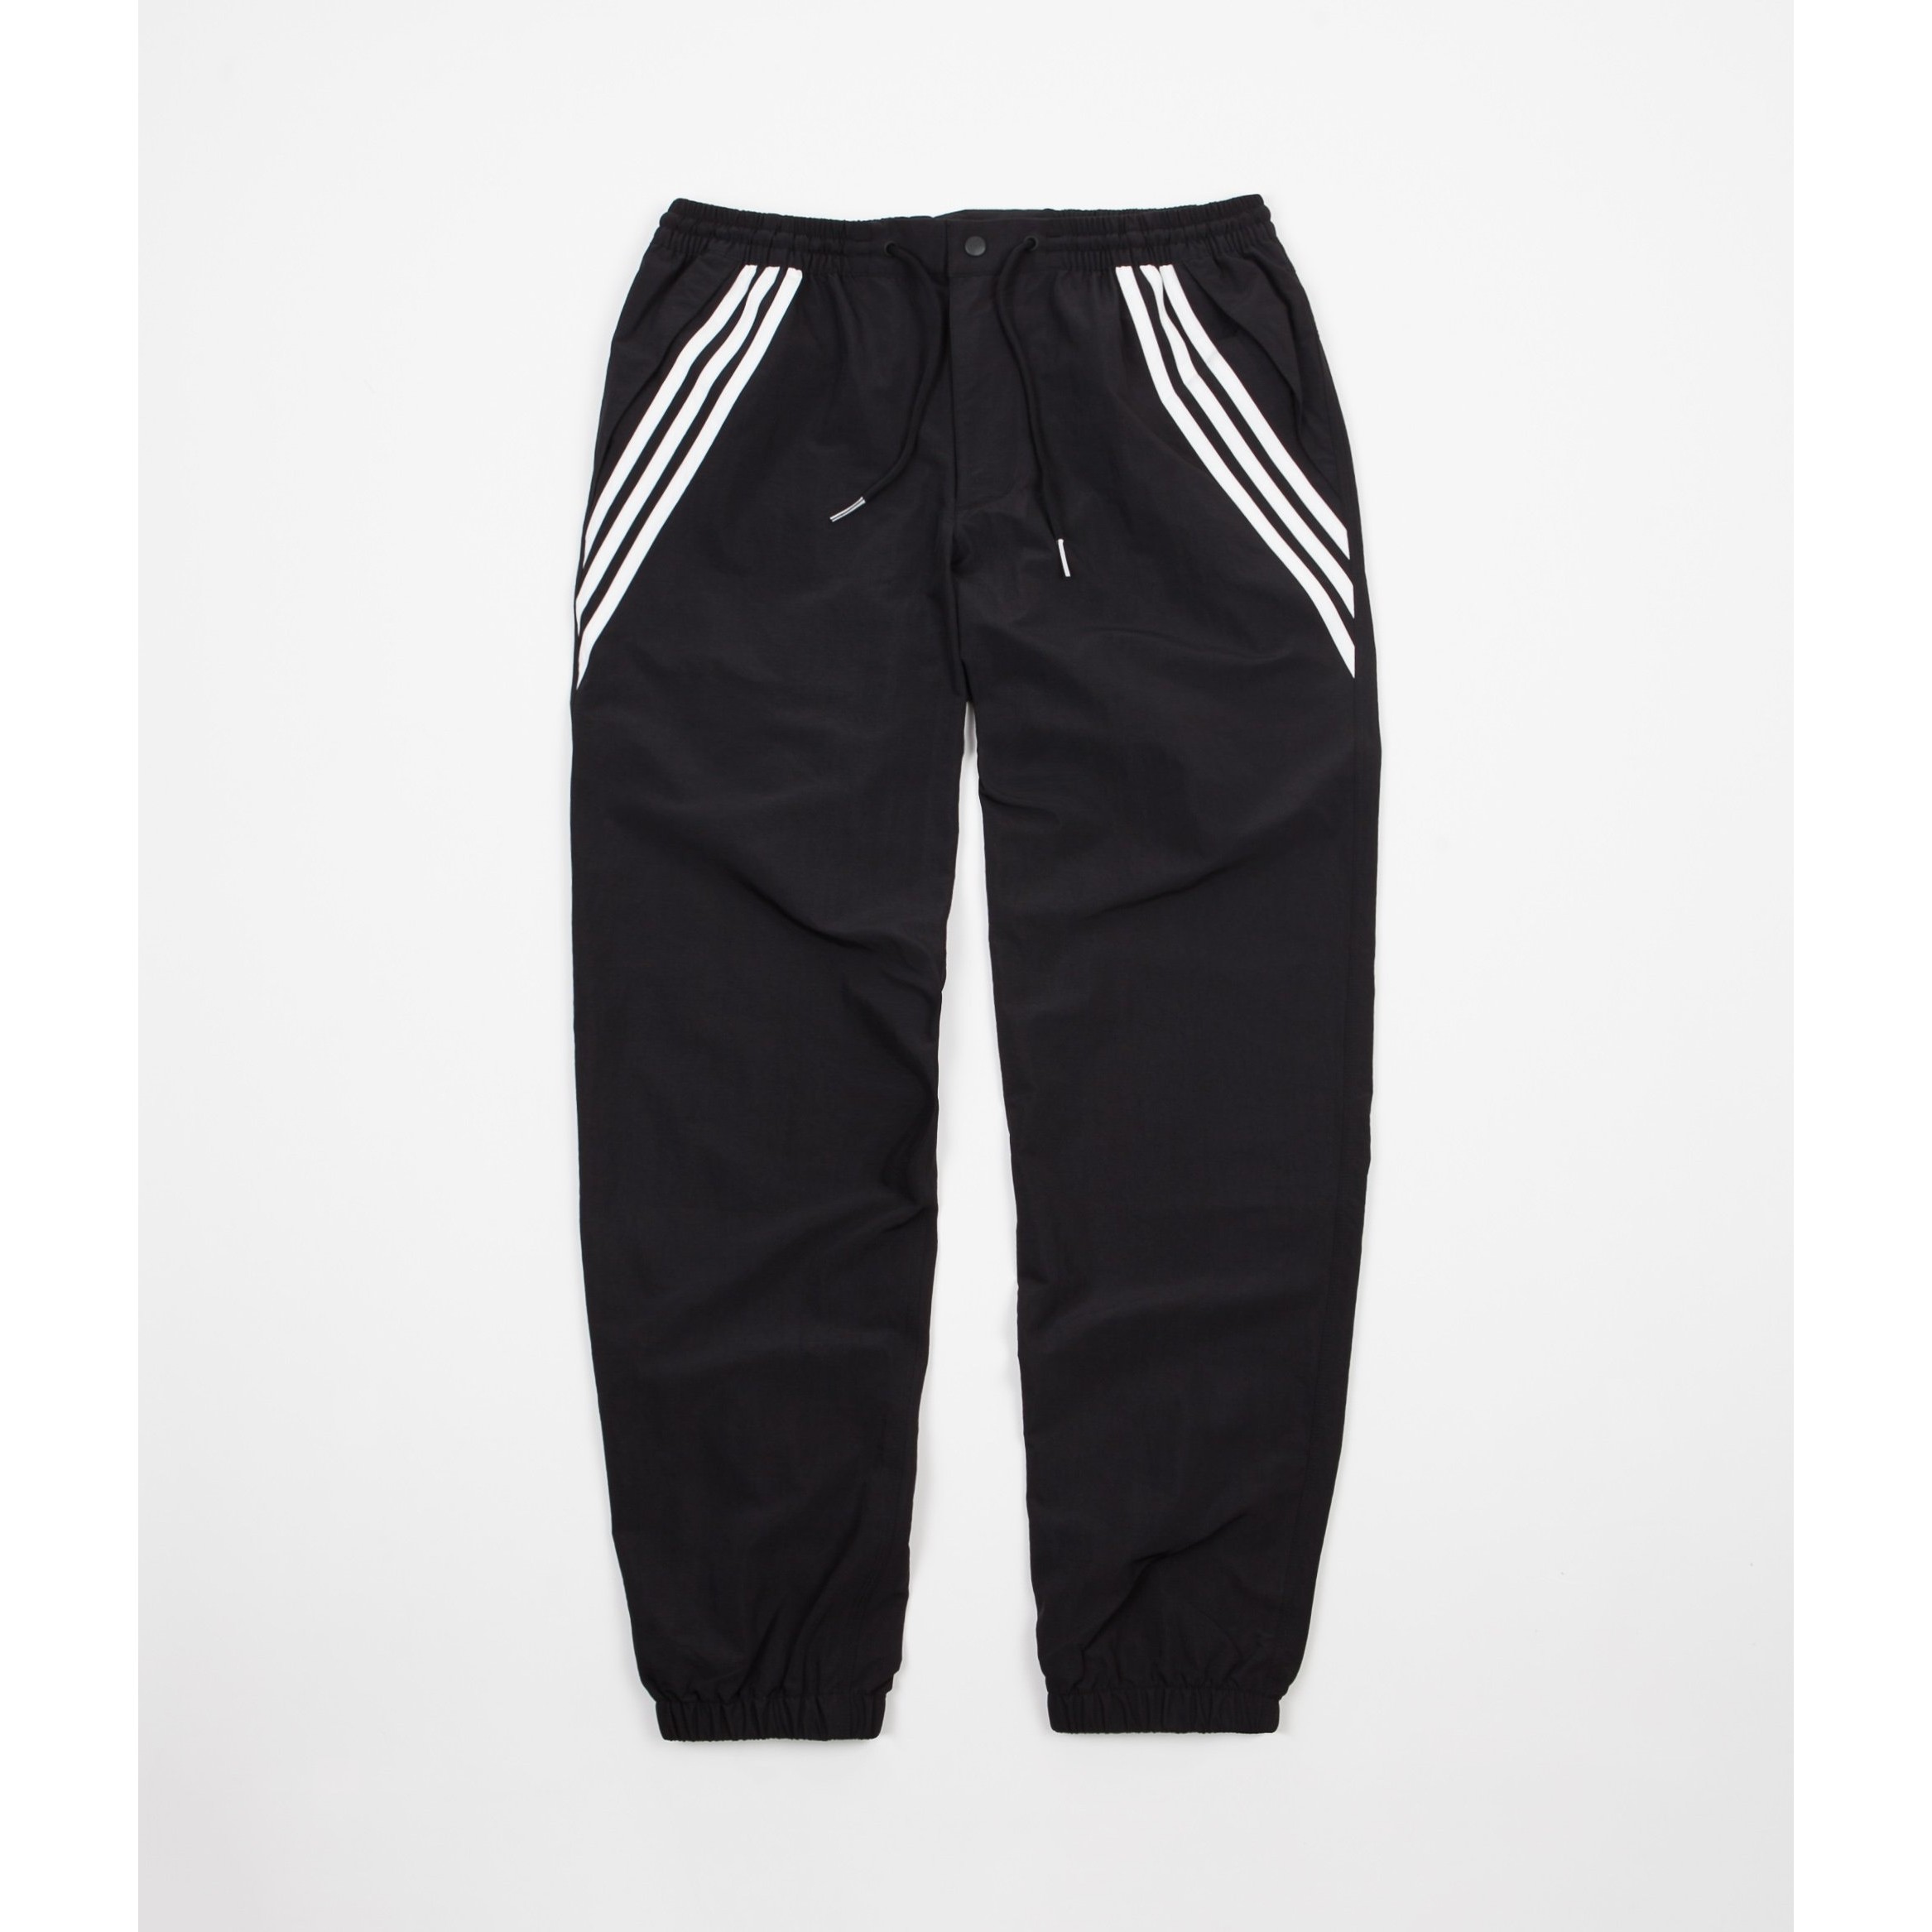 Adidas (Black/White) Pants at Denver